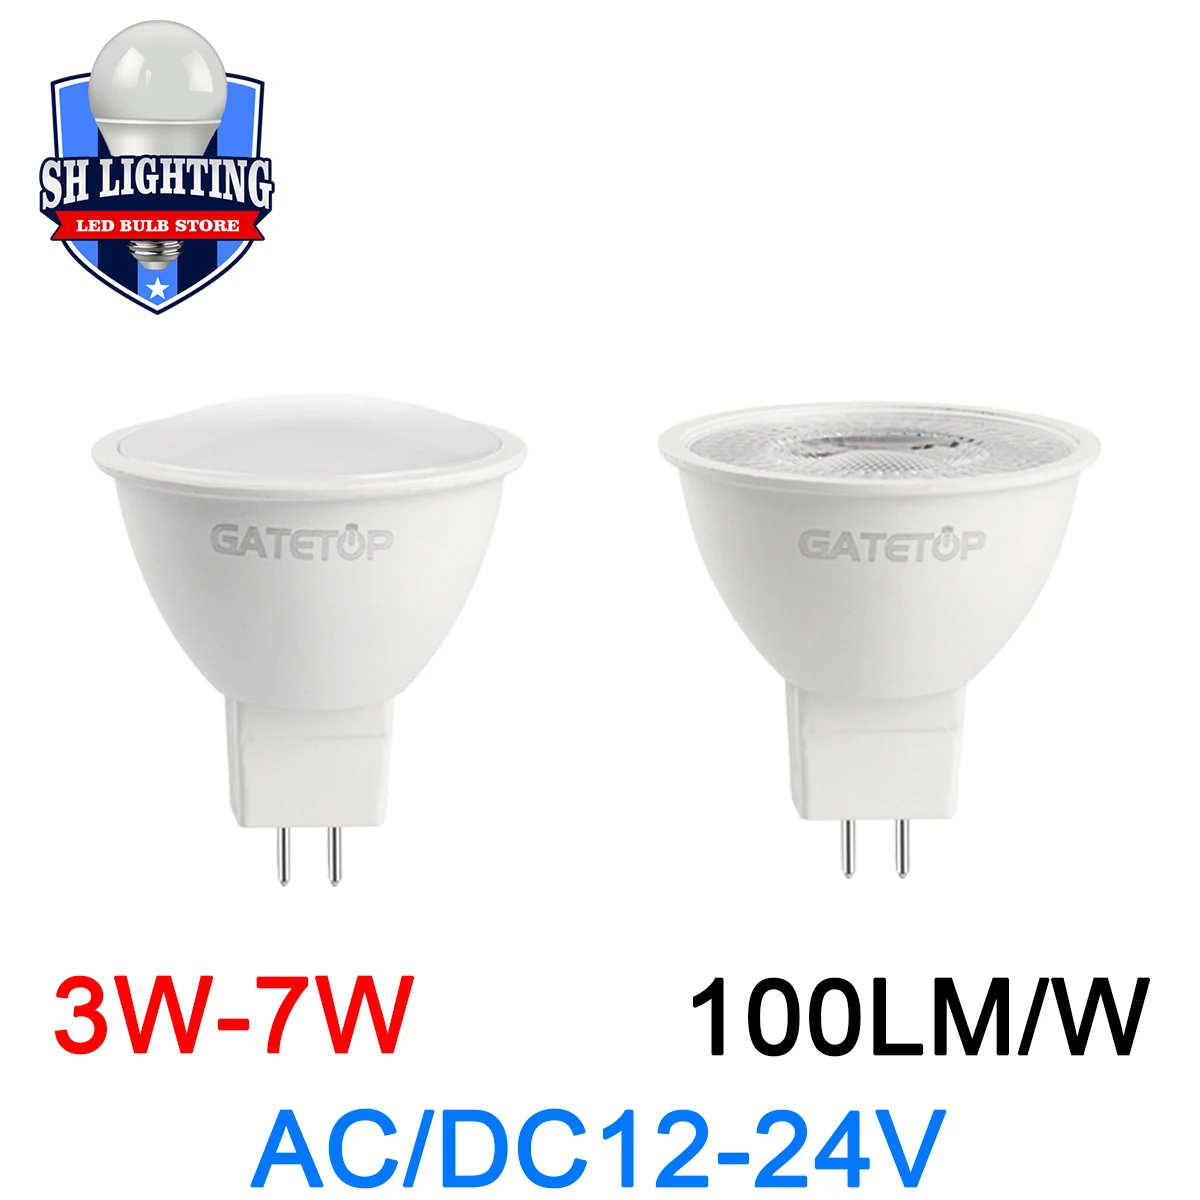 

AC/DC12V-24V Spot Foco MR16 3W-7W GU 5.3 Warm White Day Light LED Light Lamp For Home Decoration Replace 50W Halogen Spotlight